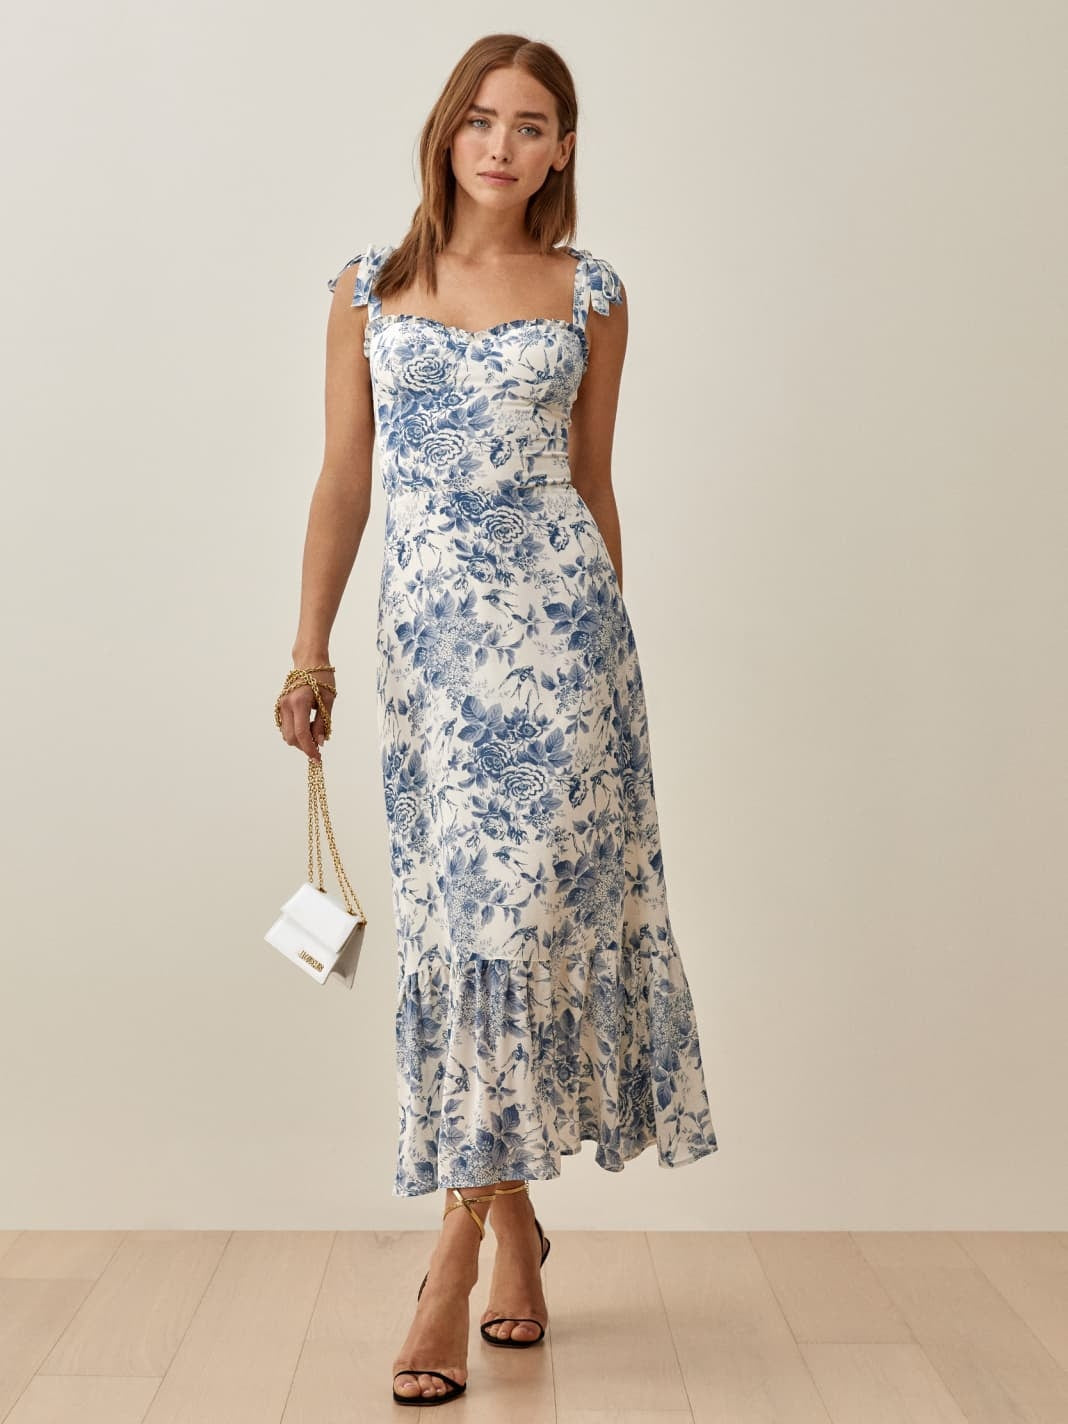 Dileoo Fashion Women French Vintage Flowers Print Slim Strap Dress 2022 Summer Sleeveless Female Lace-Up Midi Dress